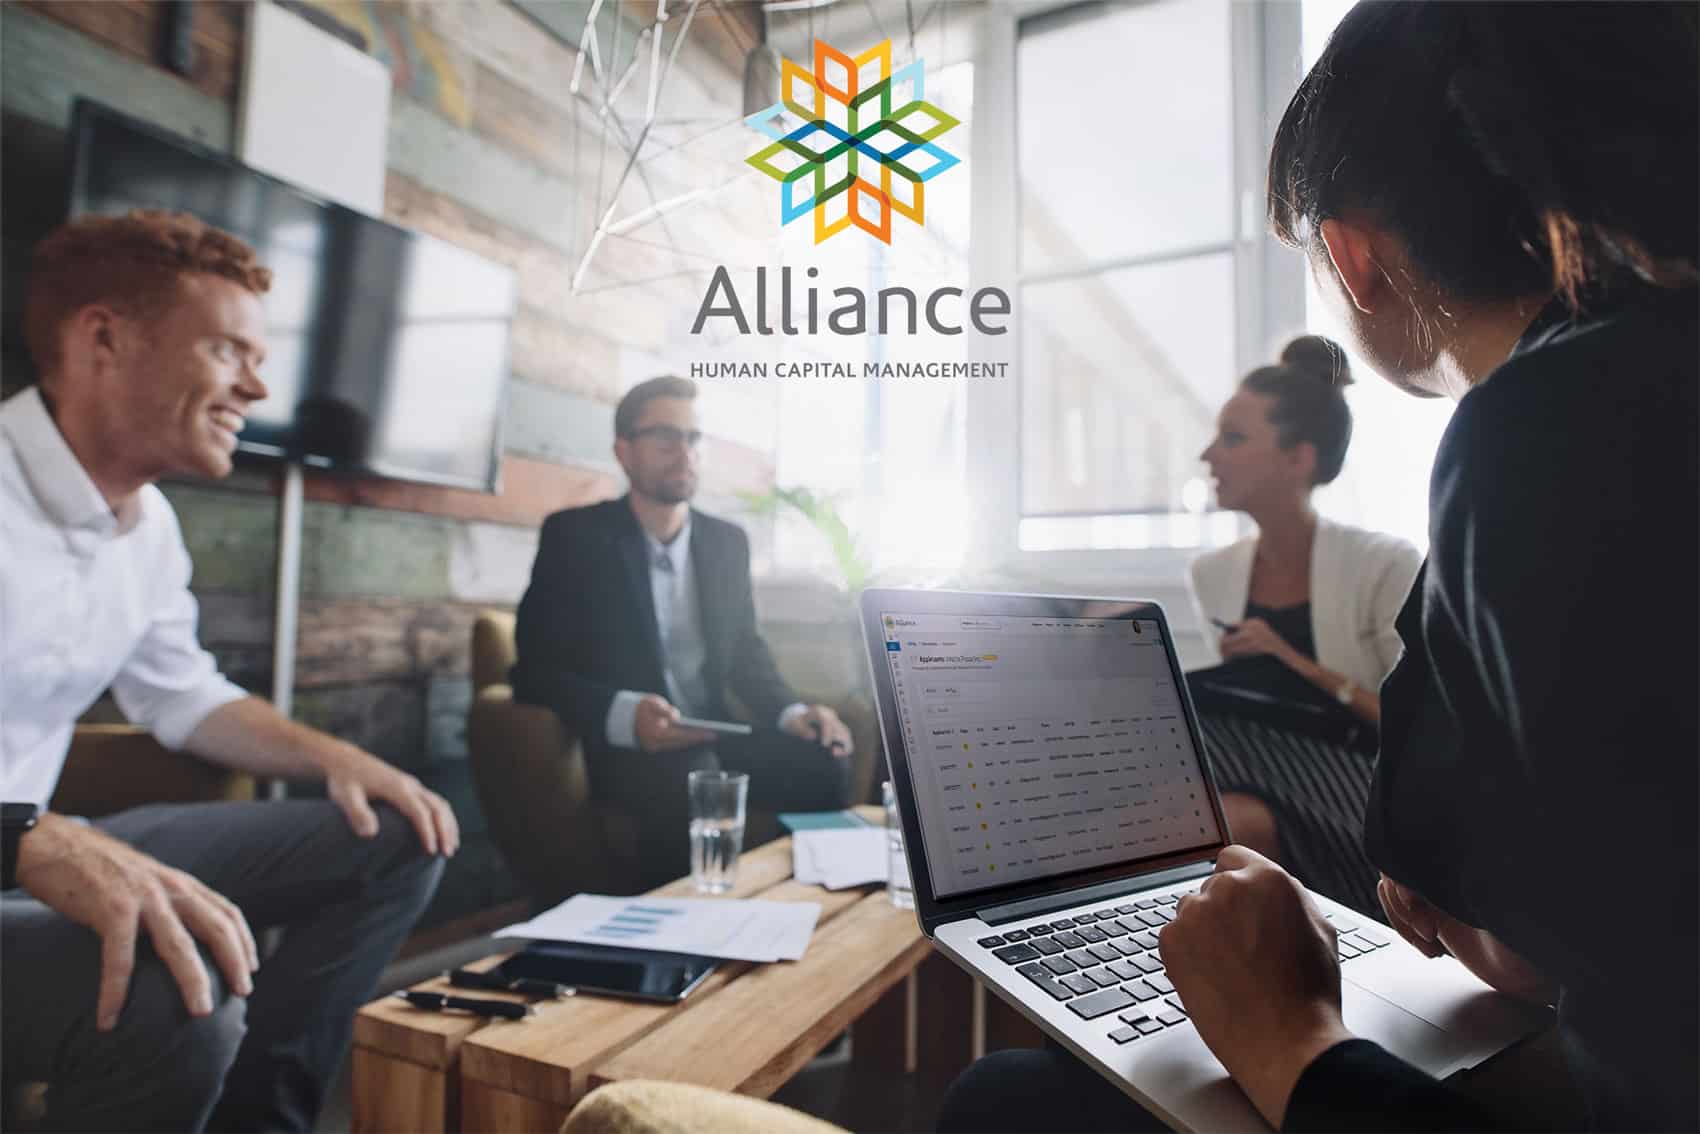 AllianceHCM: Human Capital Management Solutions